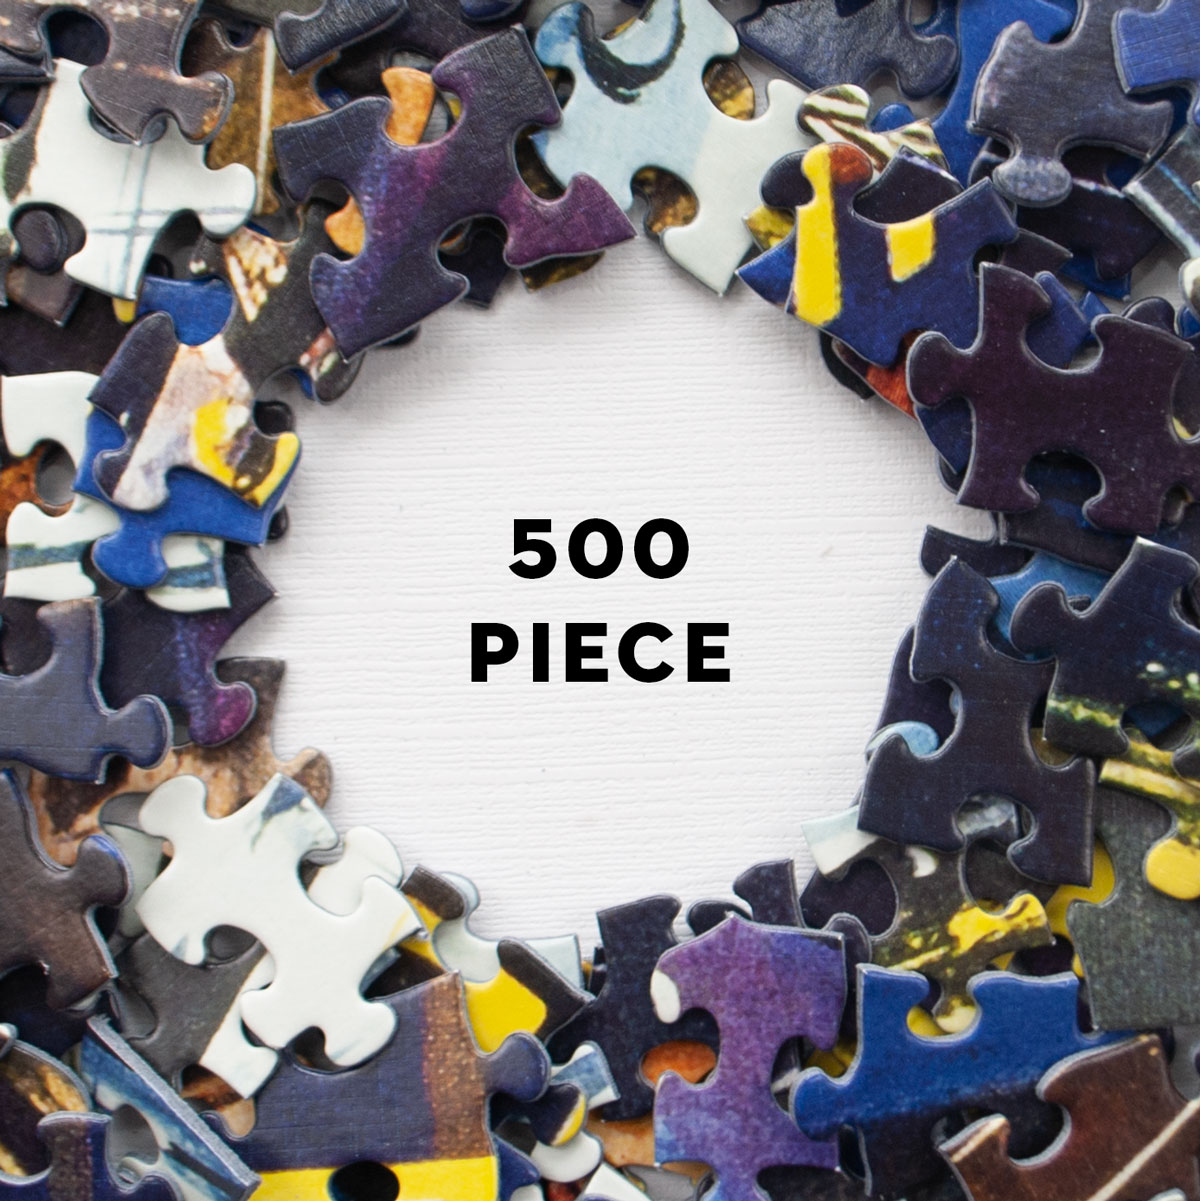 500 Piece – New York Puzzle Company